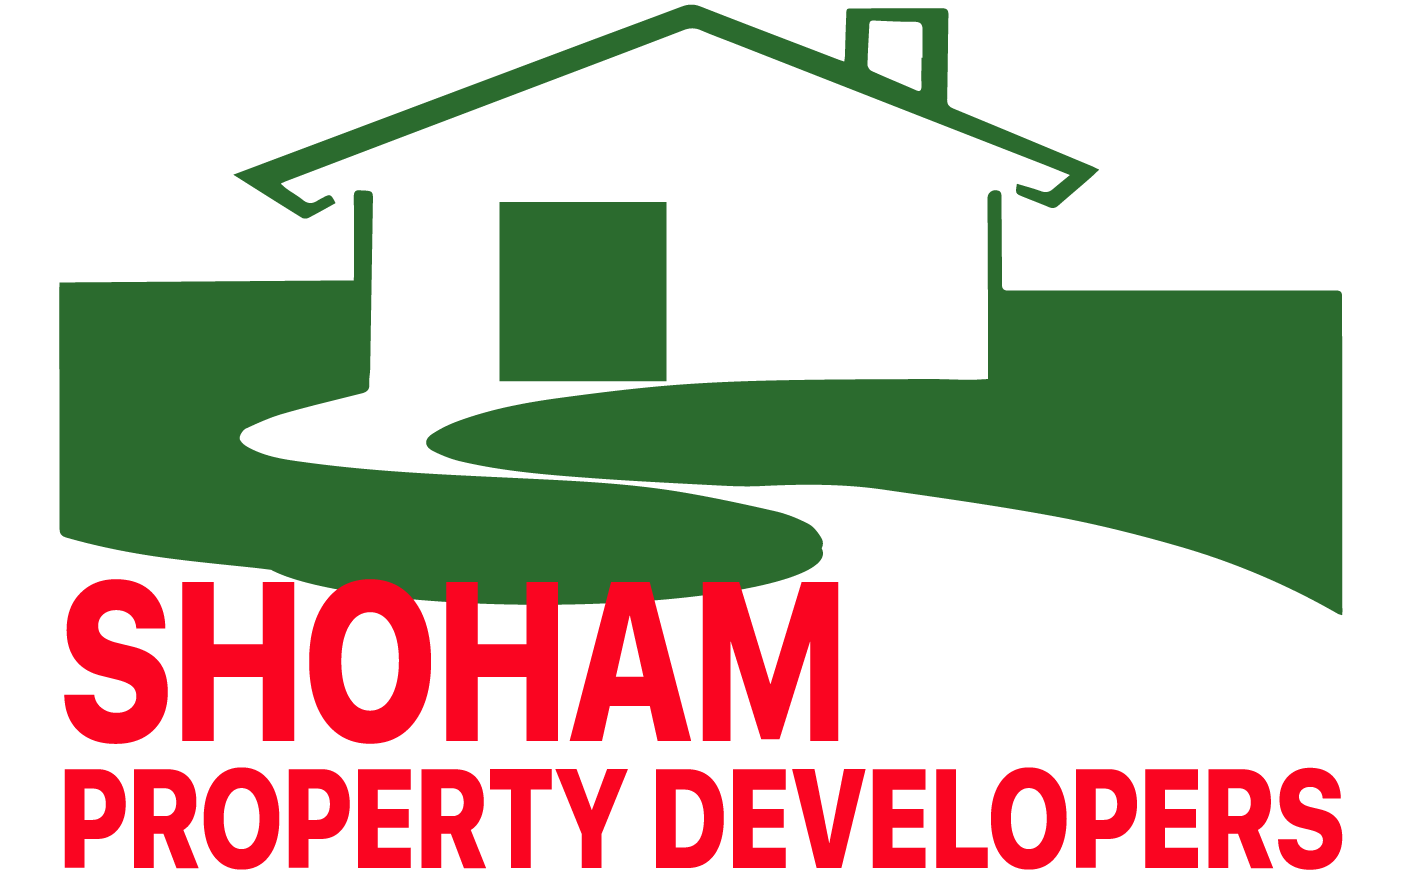 Shoham Property Developers Limited